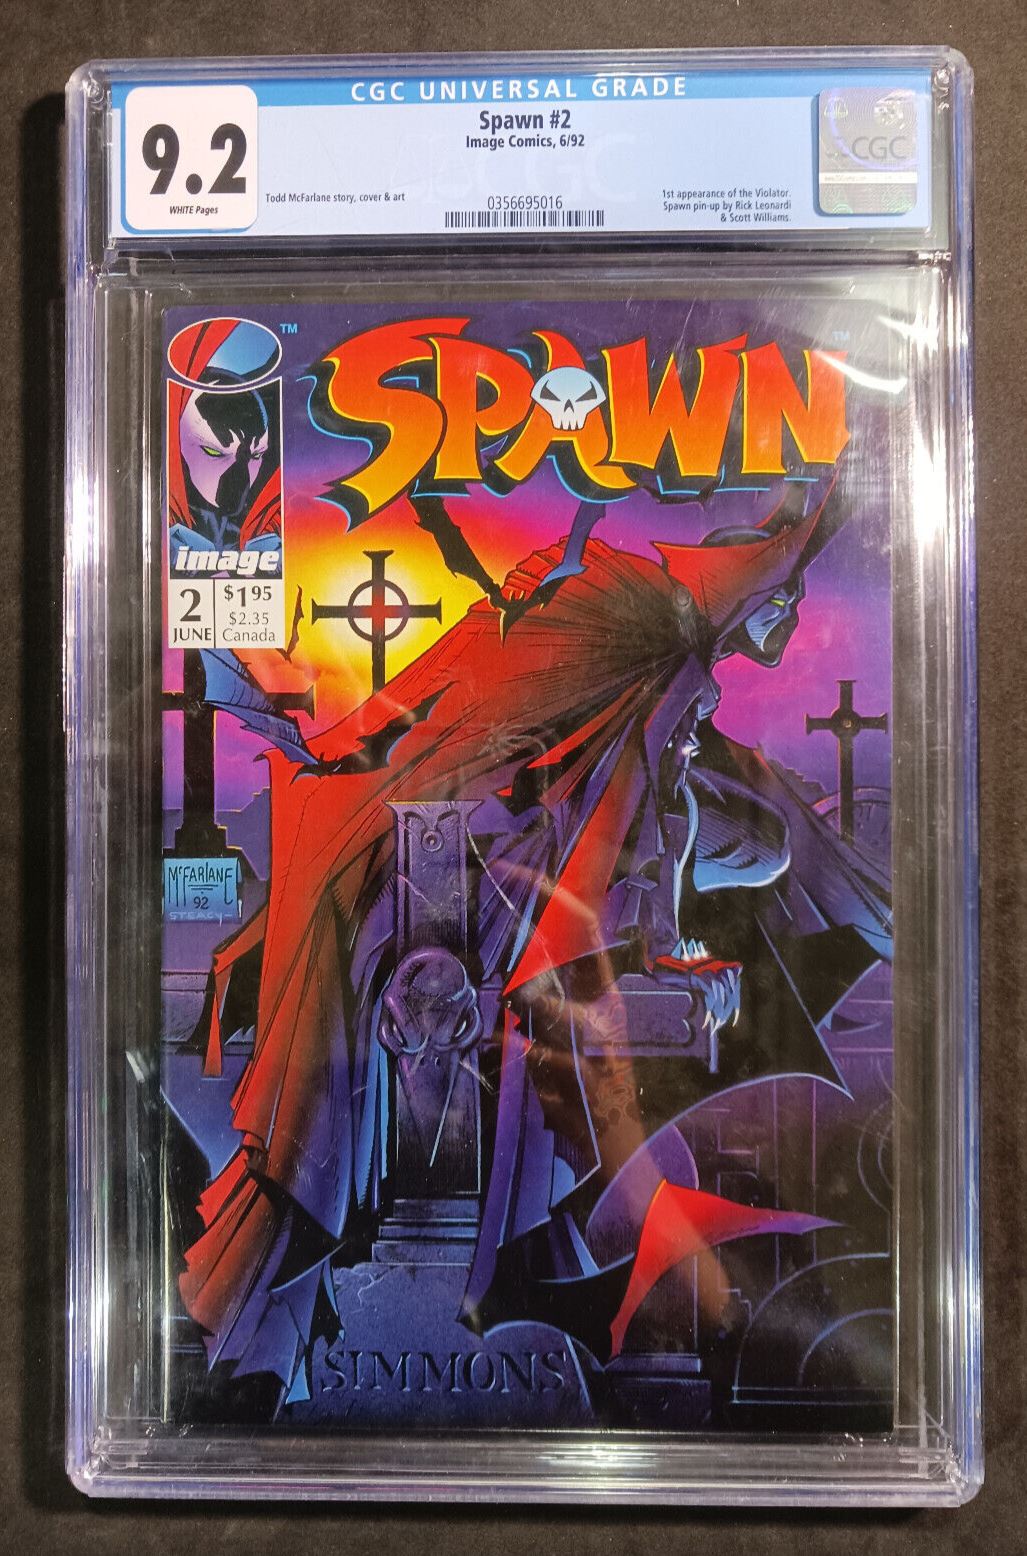 Spawn #2 Image Comics 1992 CGC 9.2 Serial #0356695016